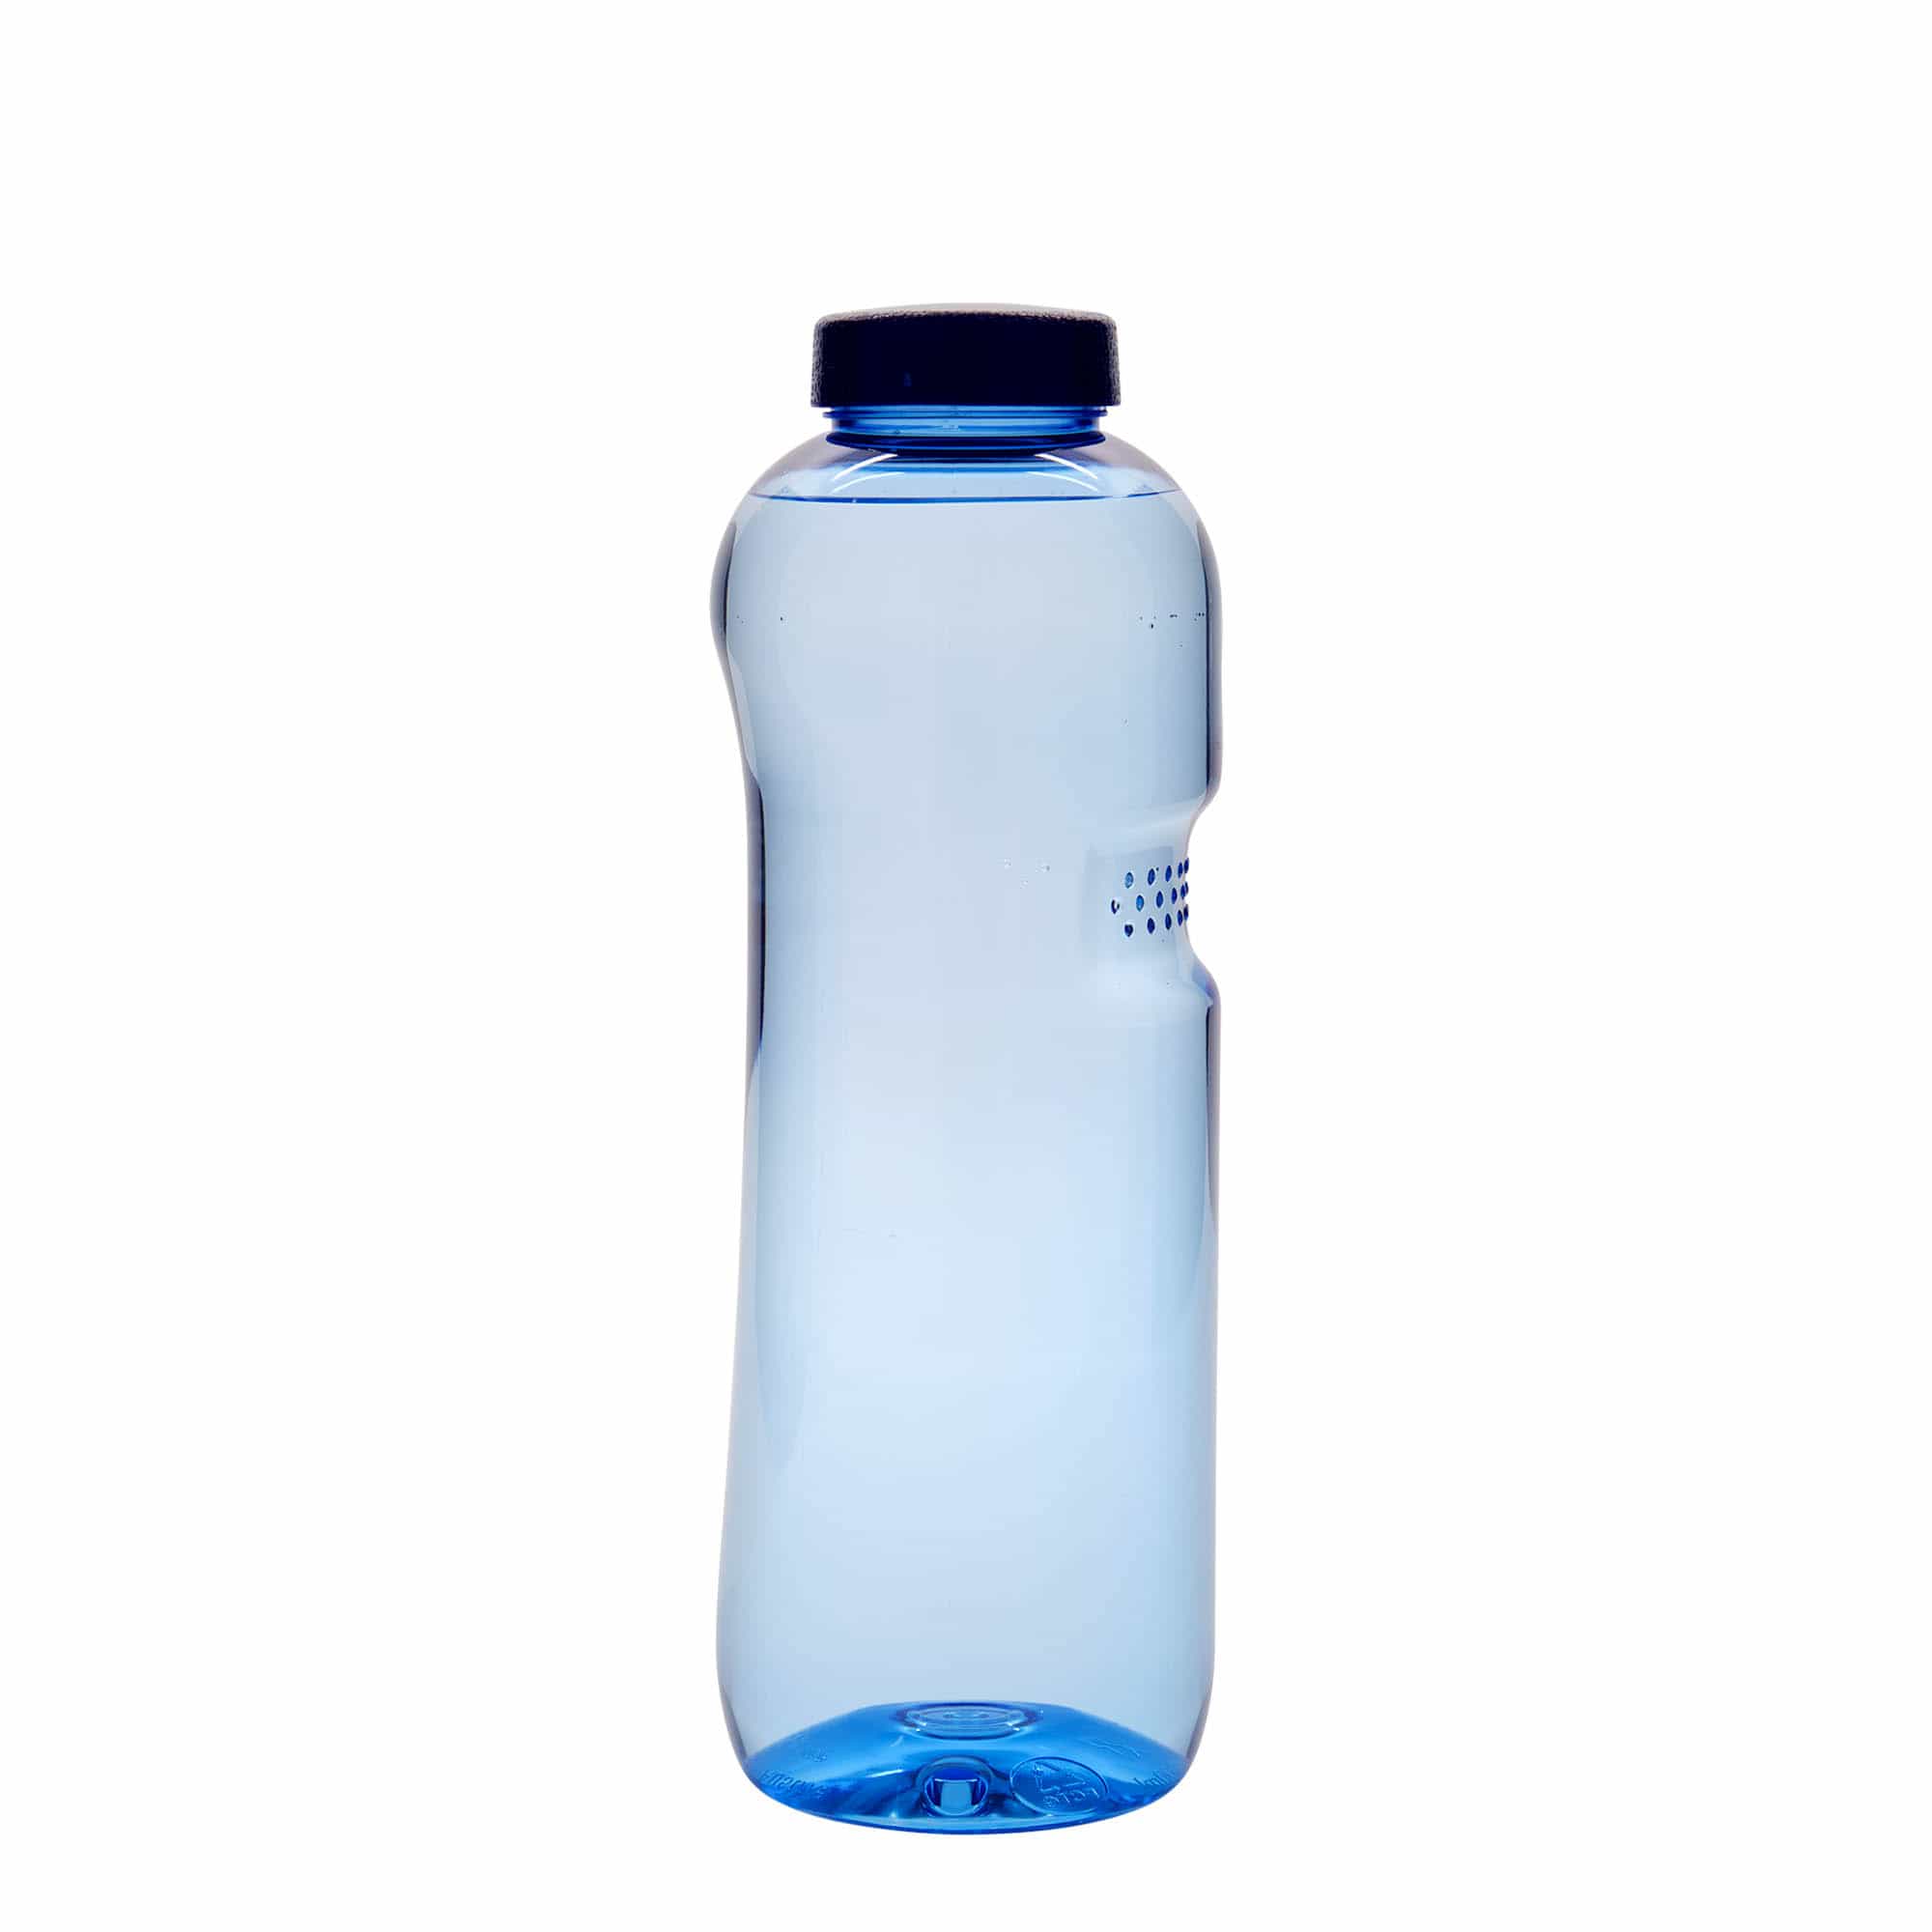 1,000 ml PET water bottle 'Kavodrink', plastic, blue